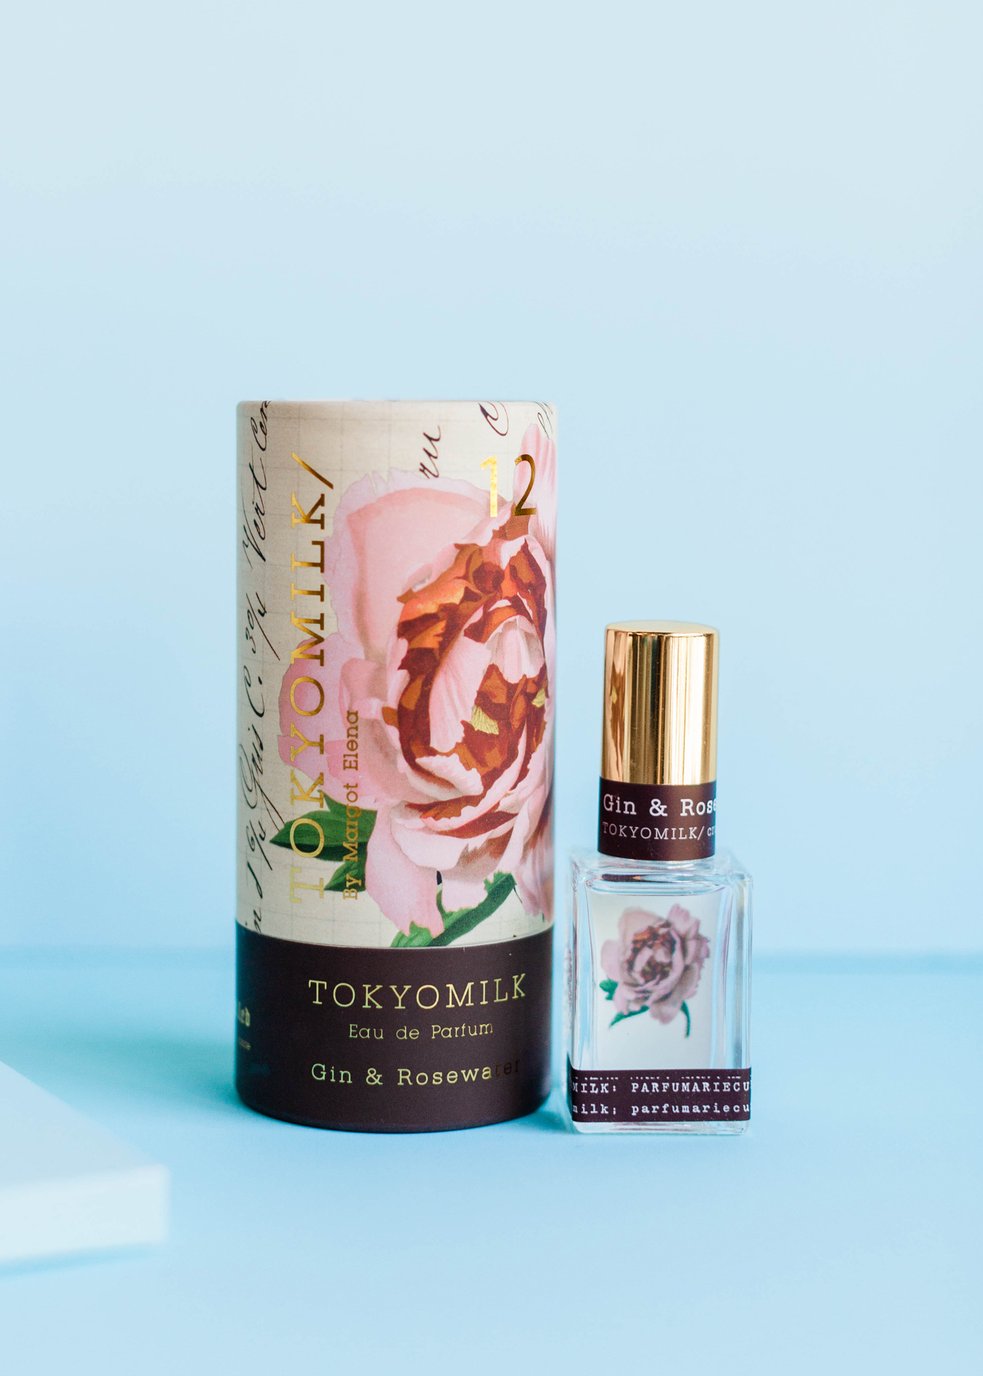 Tokyo Milk - Gin and Rosewater Eau de Parfum